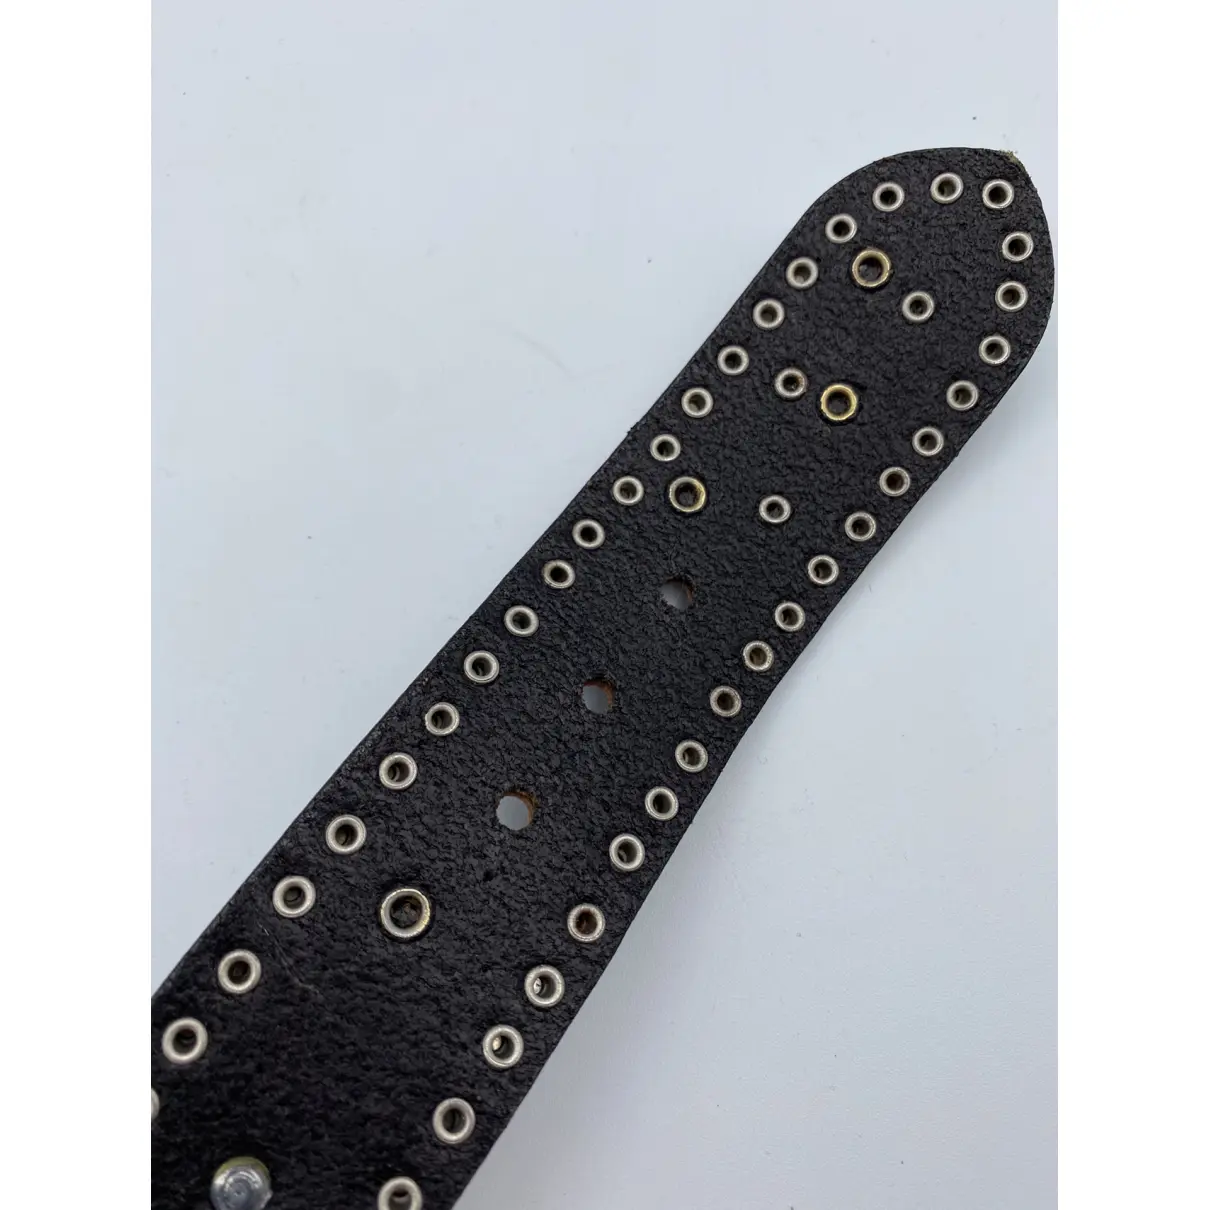 Leather belt Nanni Milano